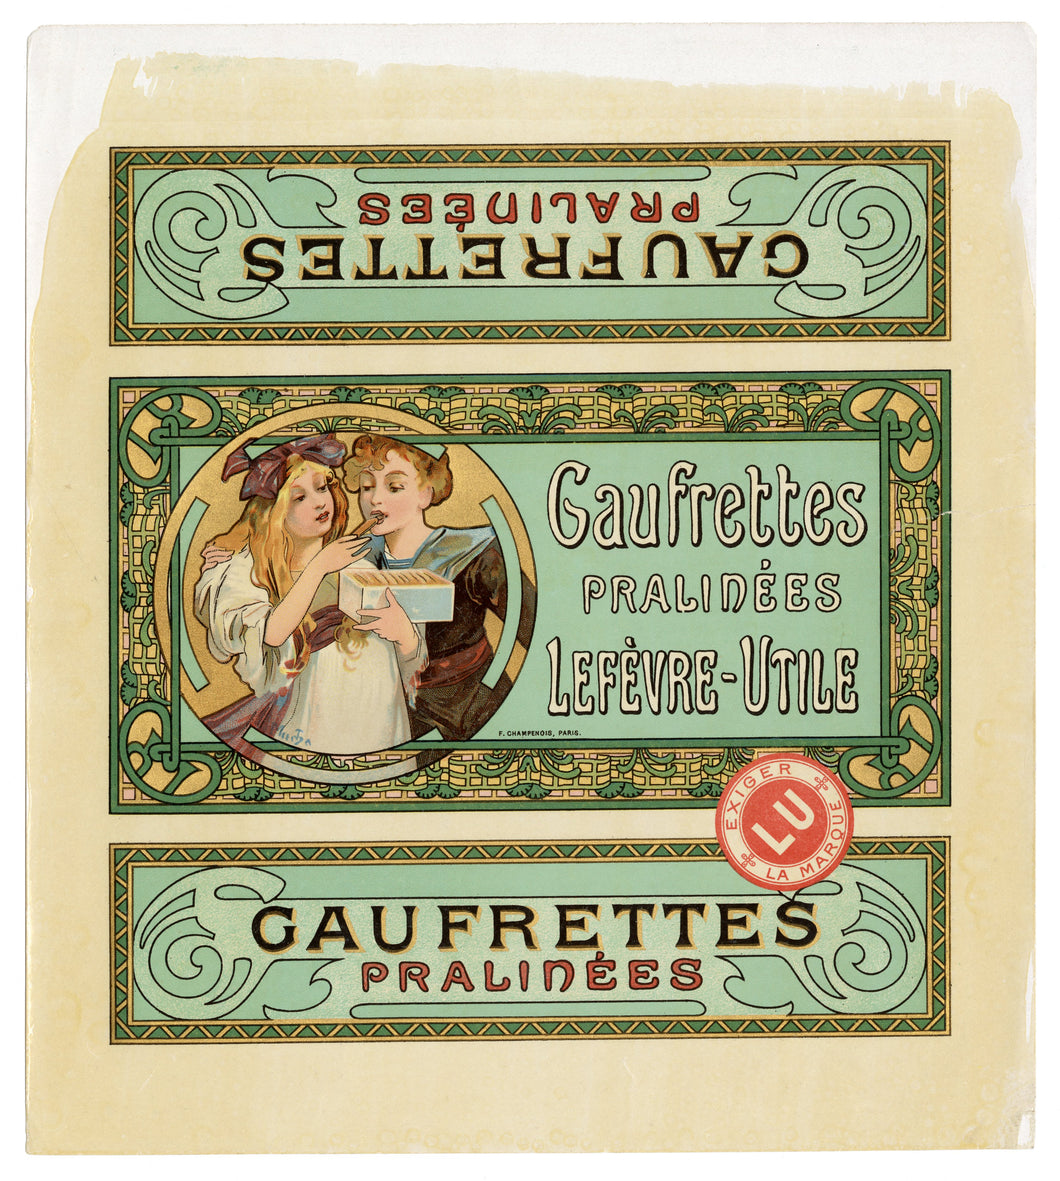 Rare ART NOUVEAU Lefevre-Utile Biscuit Label Illustrated by MUCHA